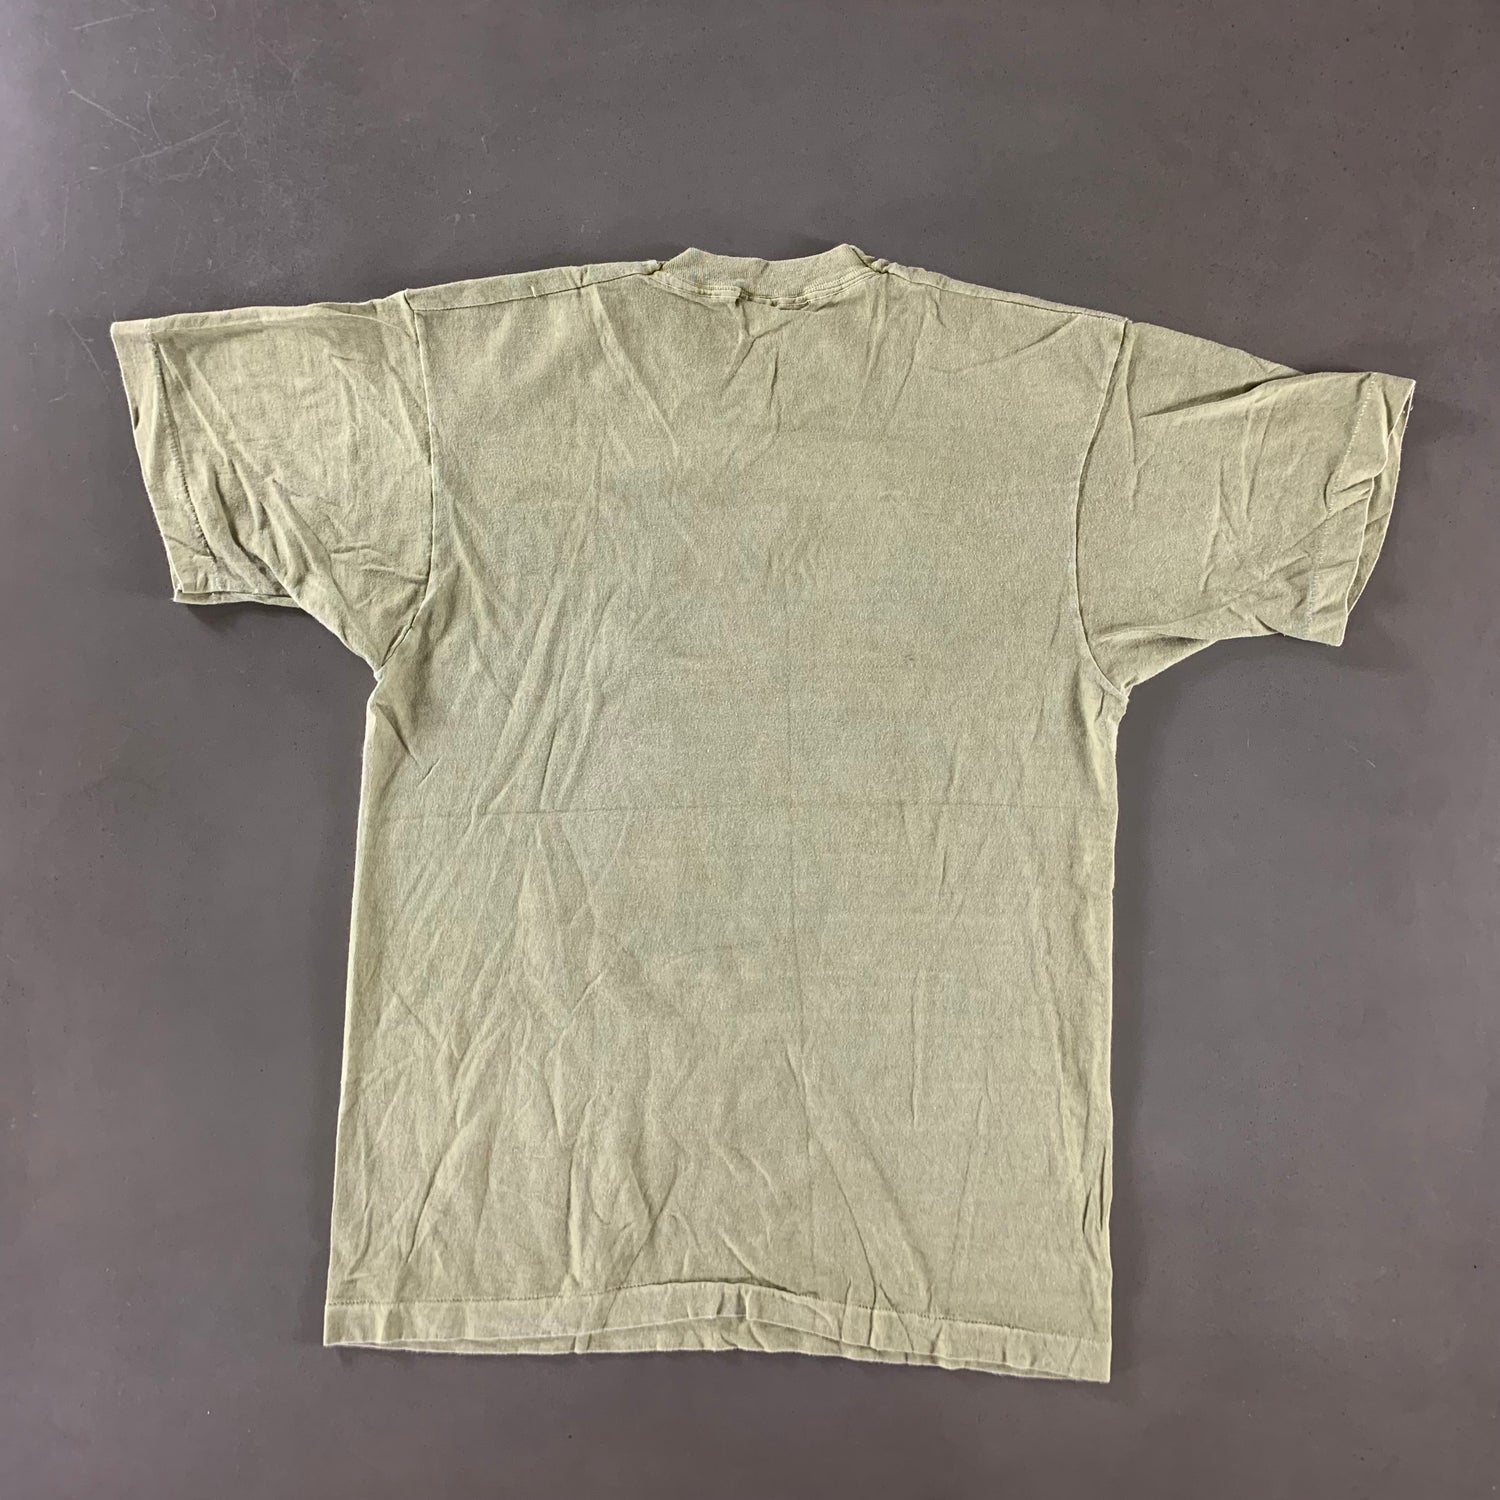 Vintage 1992 Jamaica T-shirt size Large